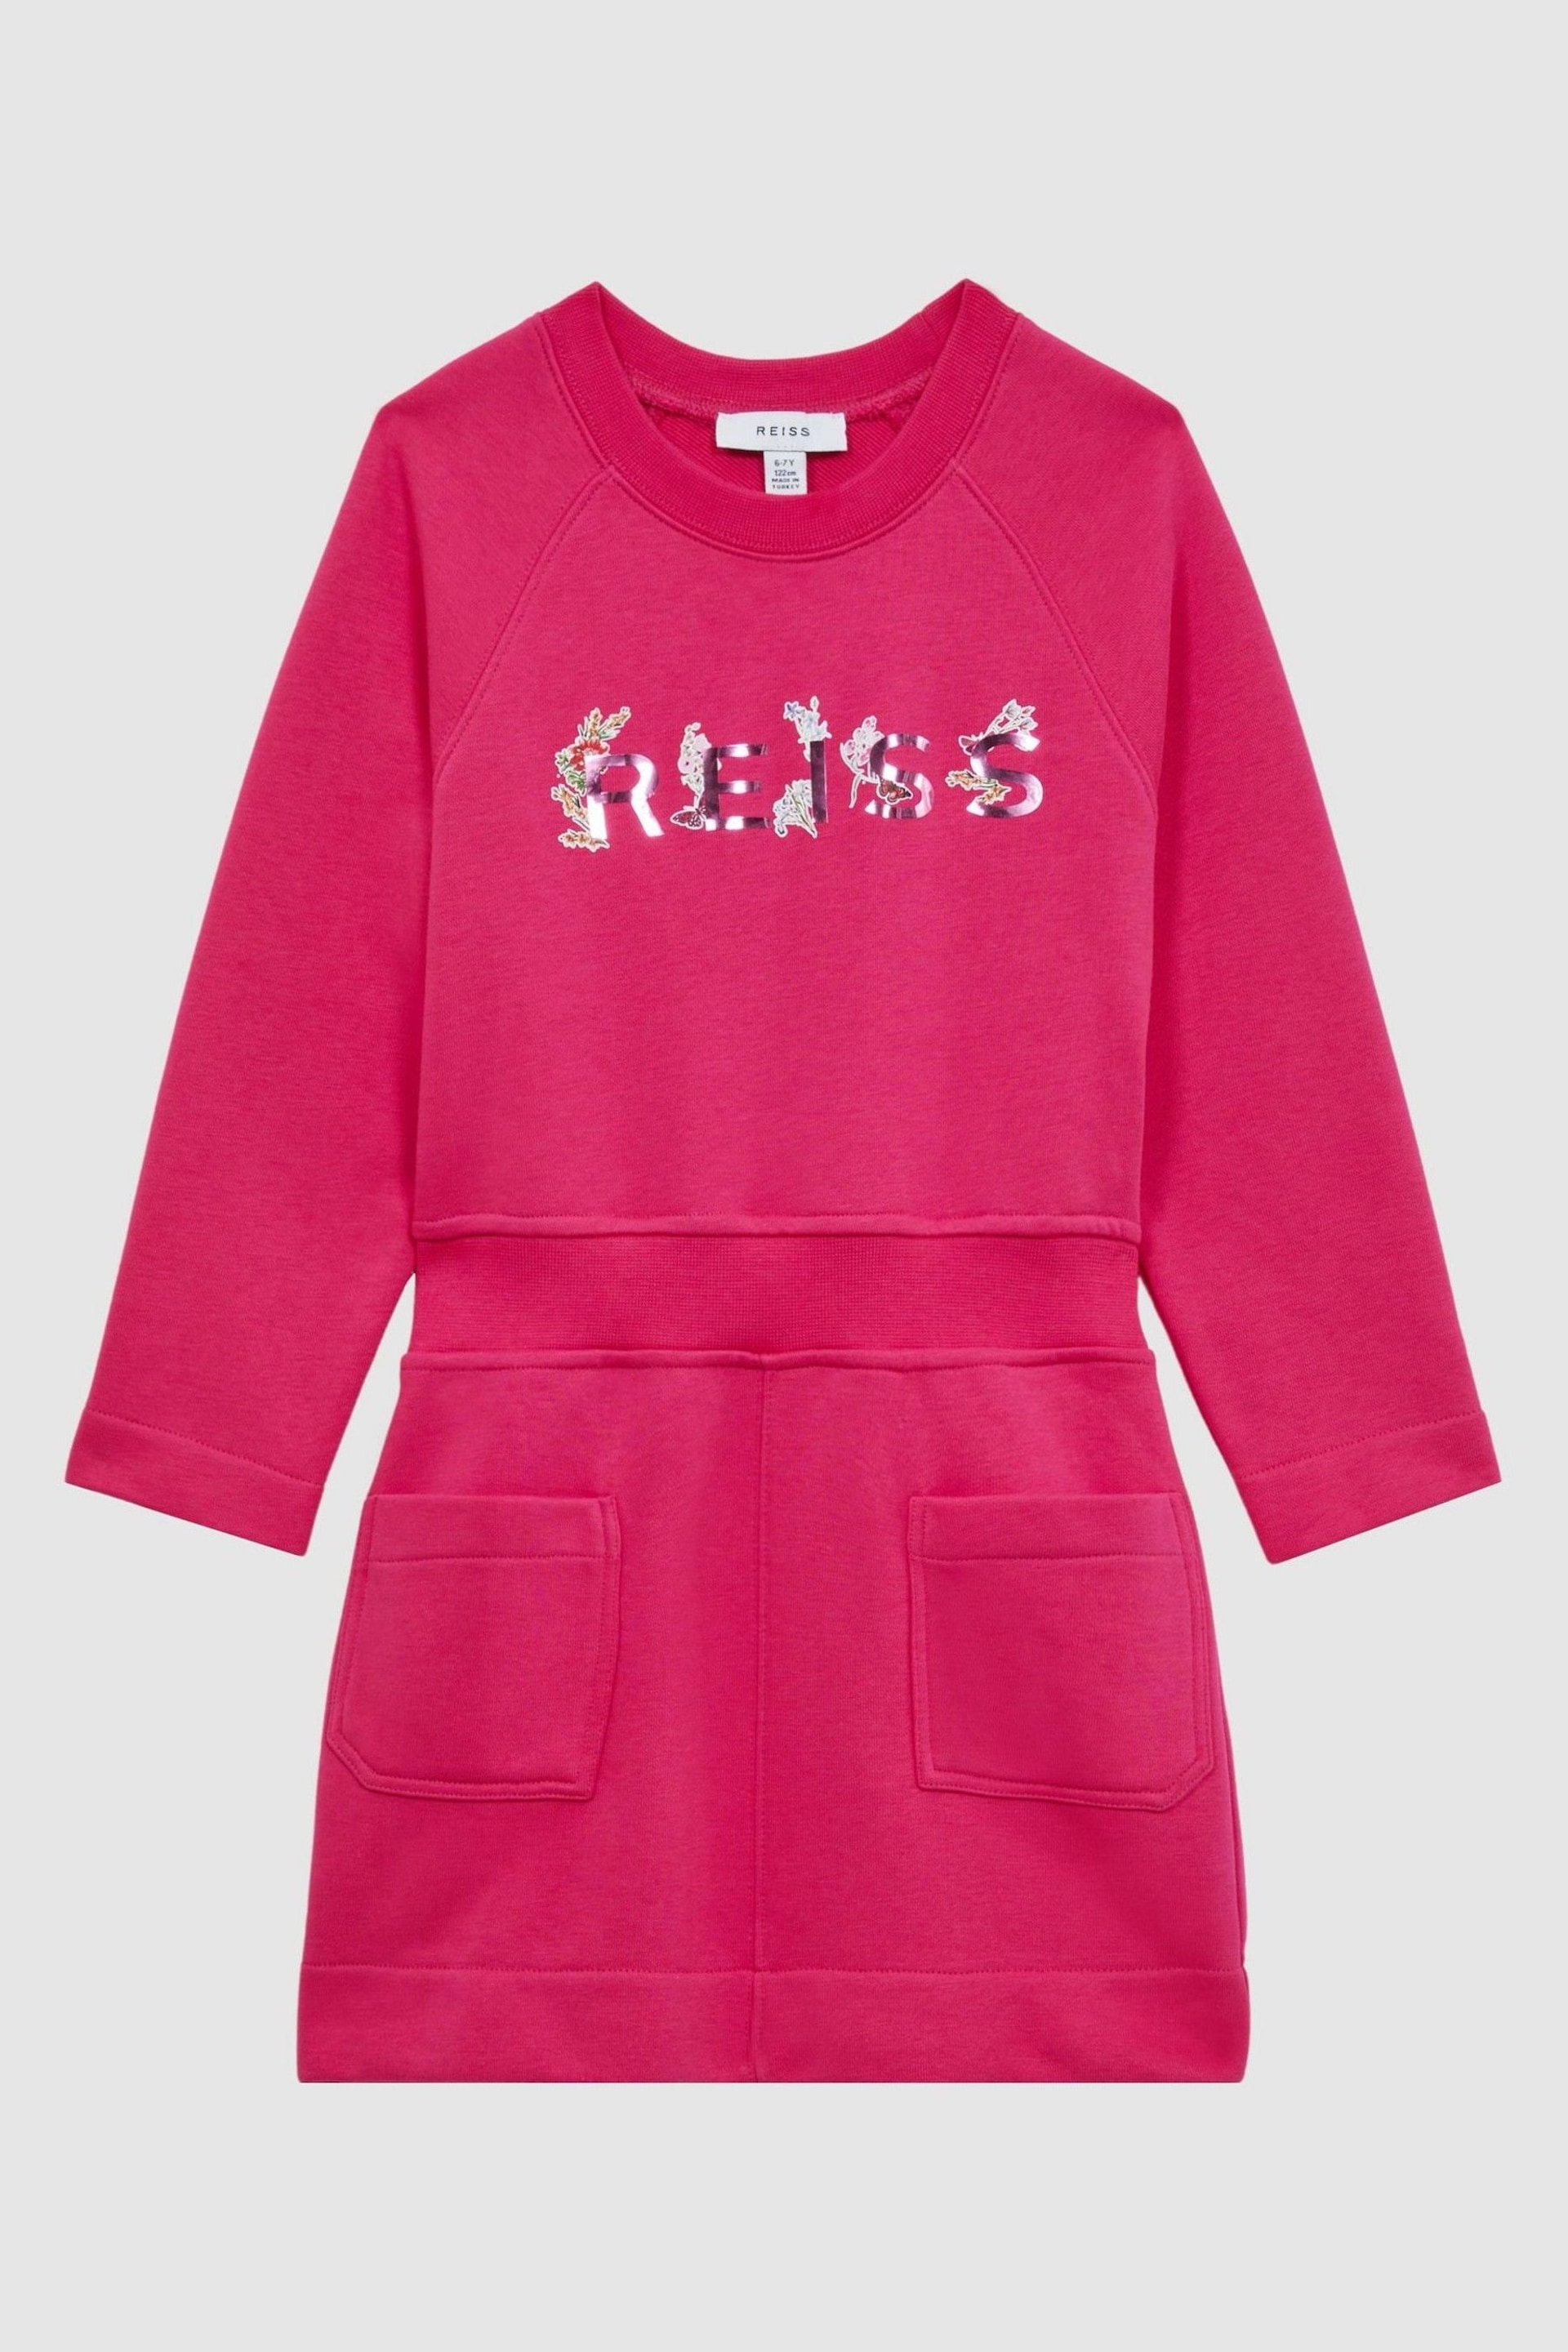 Reiss Pink Janine Junior Sweatshirt Dress - Image 2 of 6